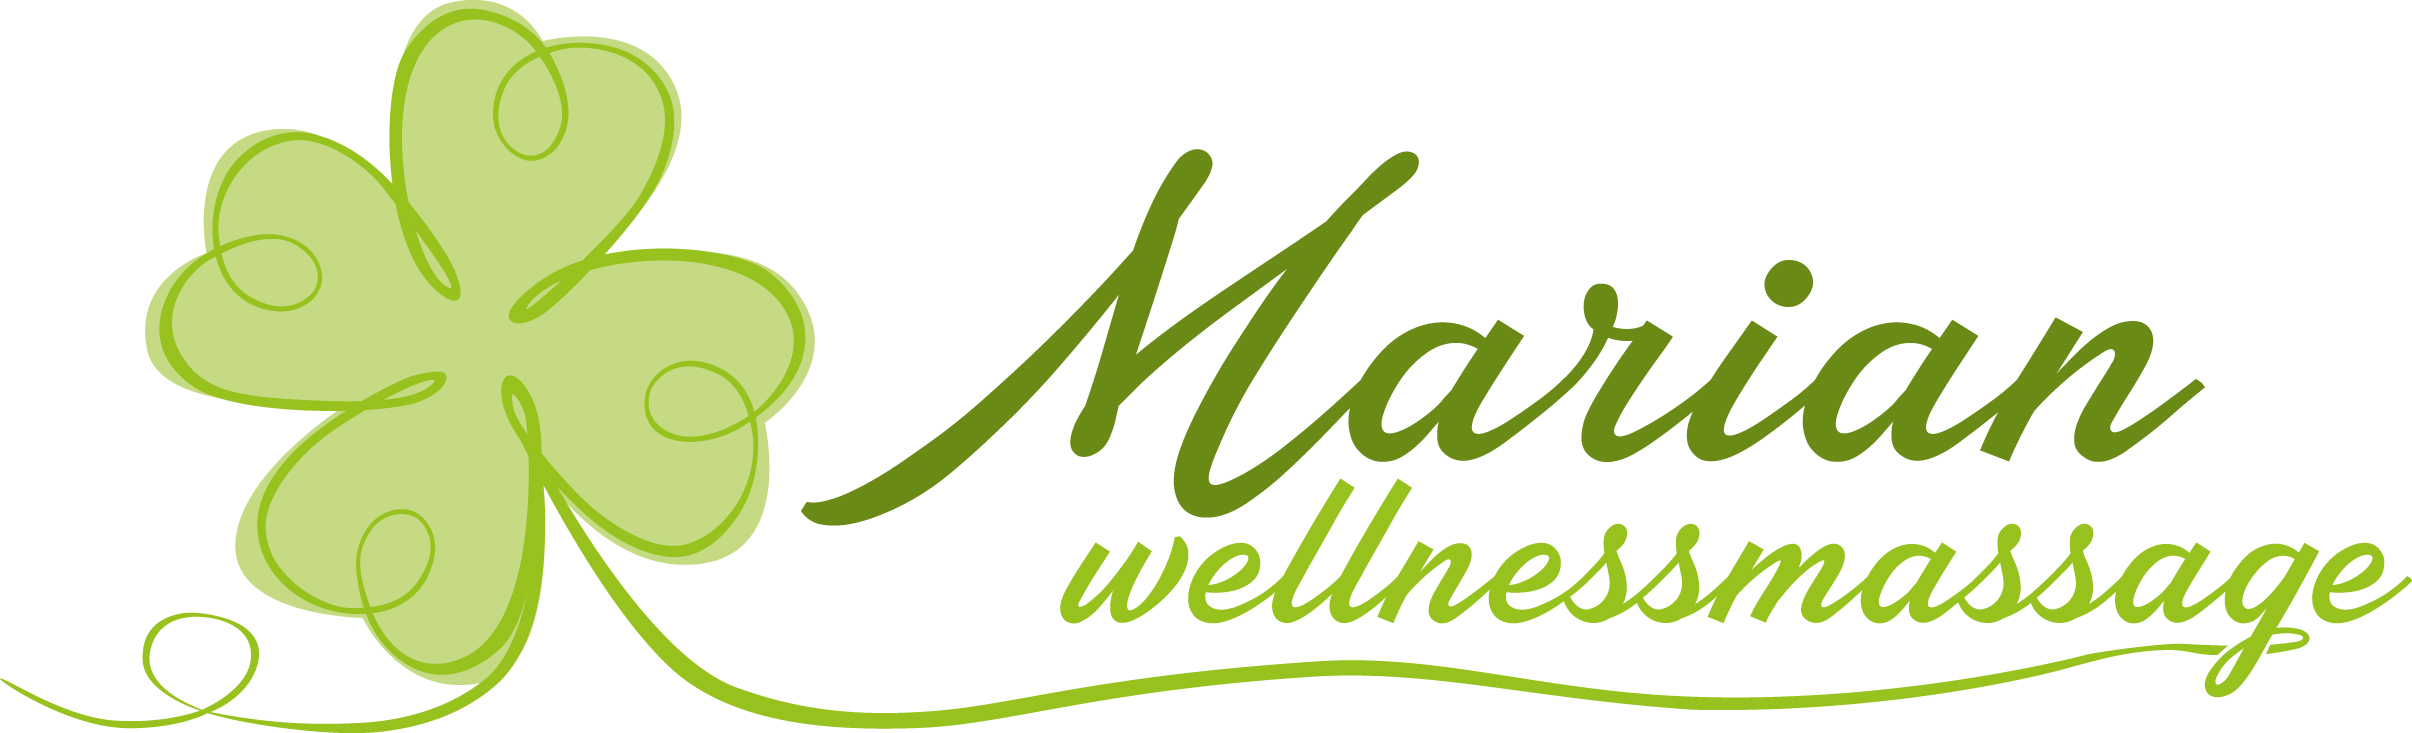 Marian Wellnessmassage